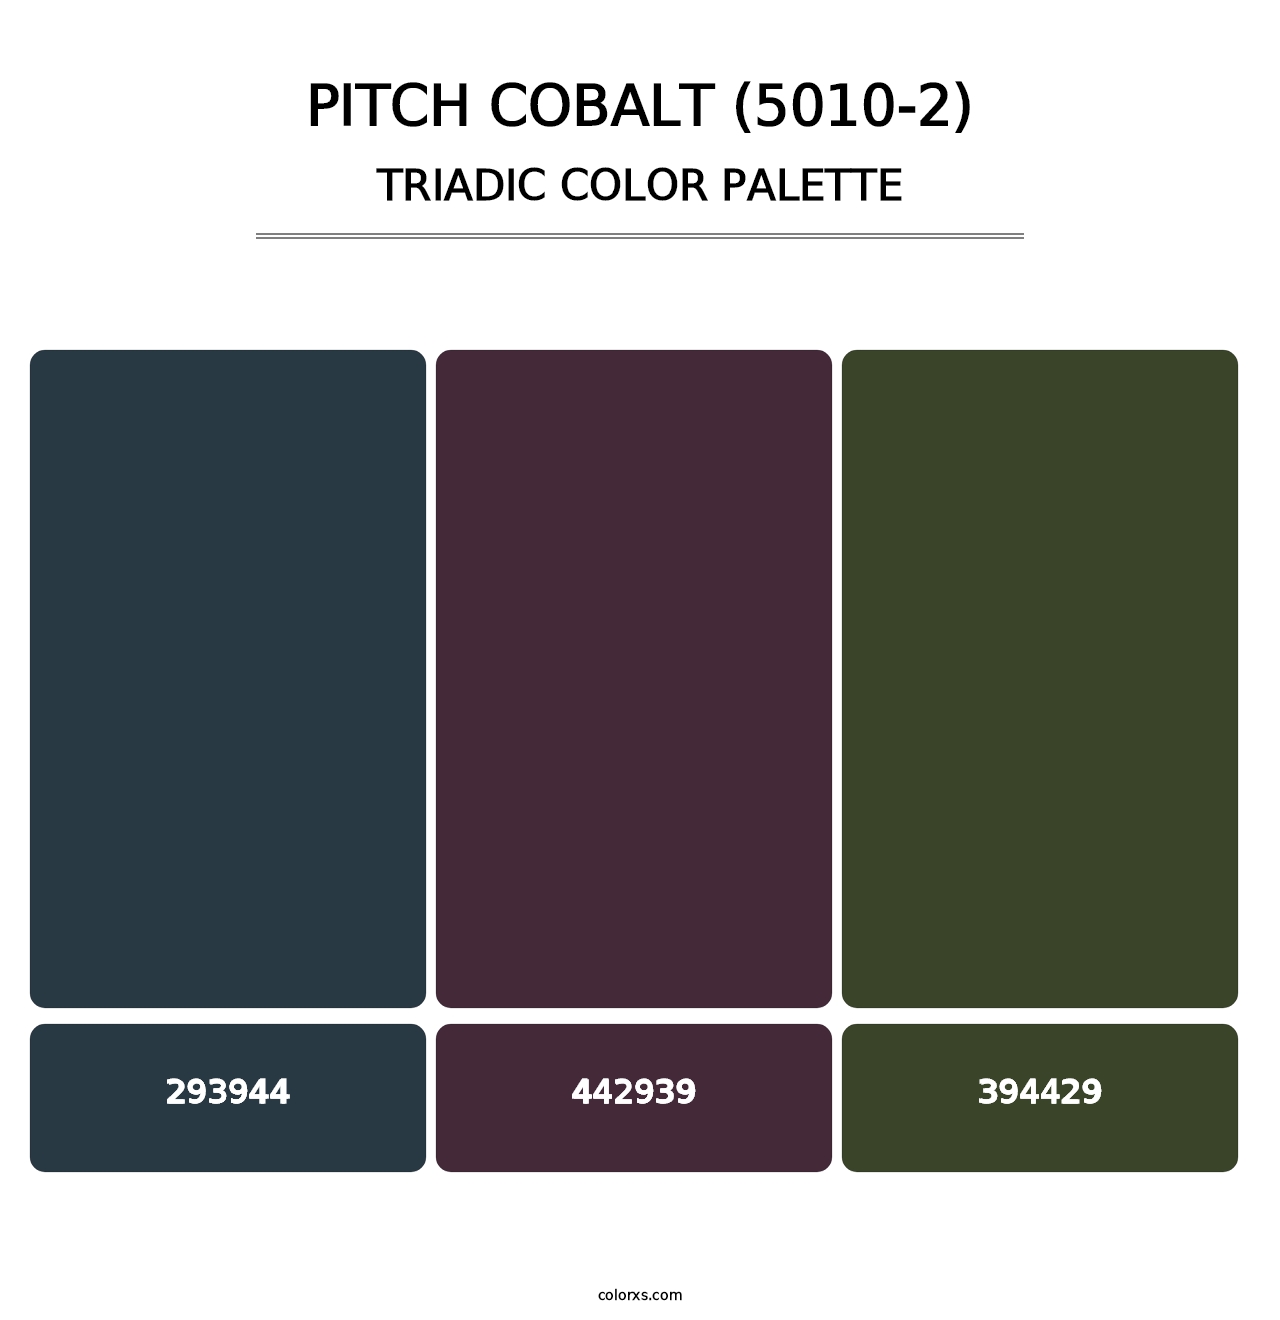 Pitch Cobalt (5010-2) - Triadic Color Palette